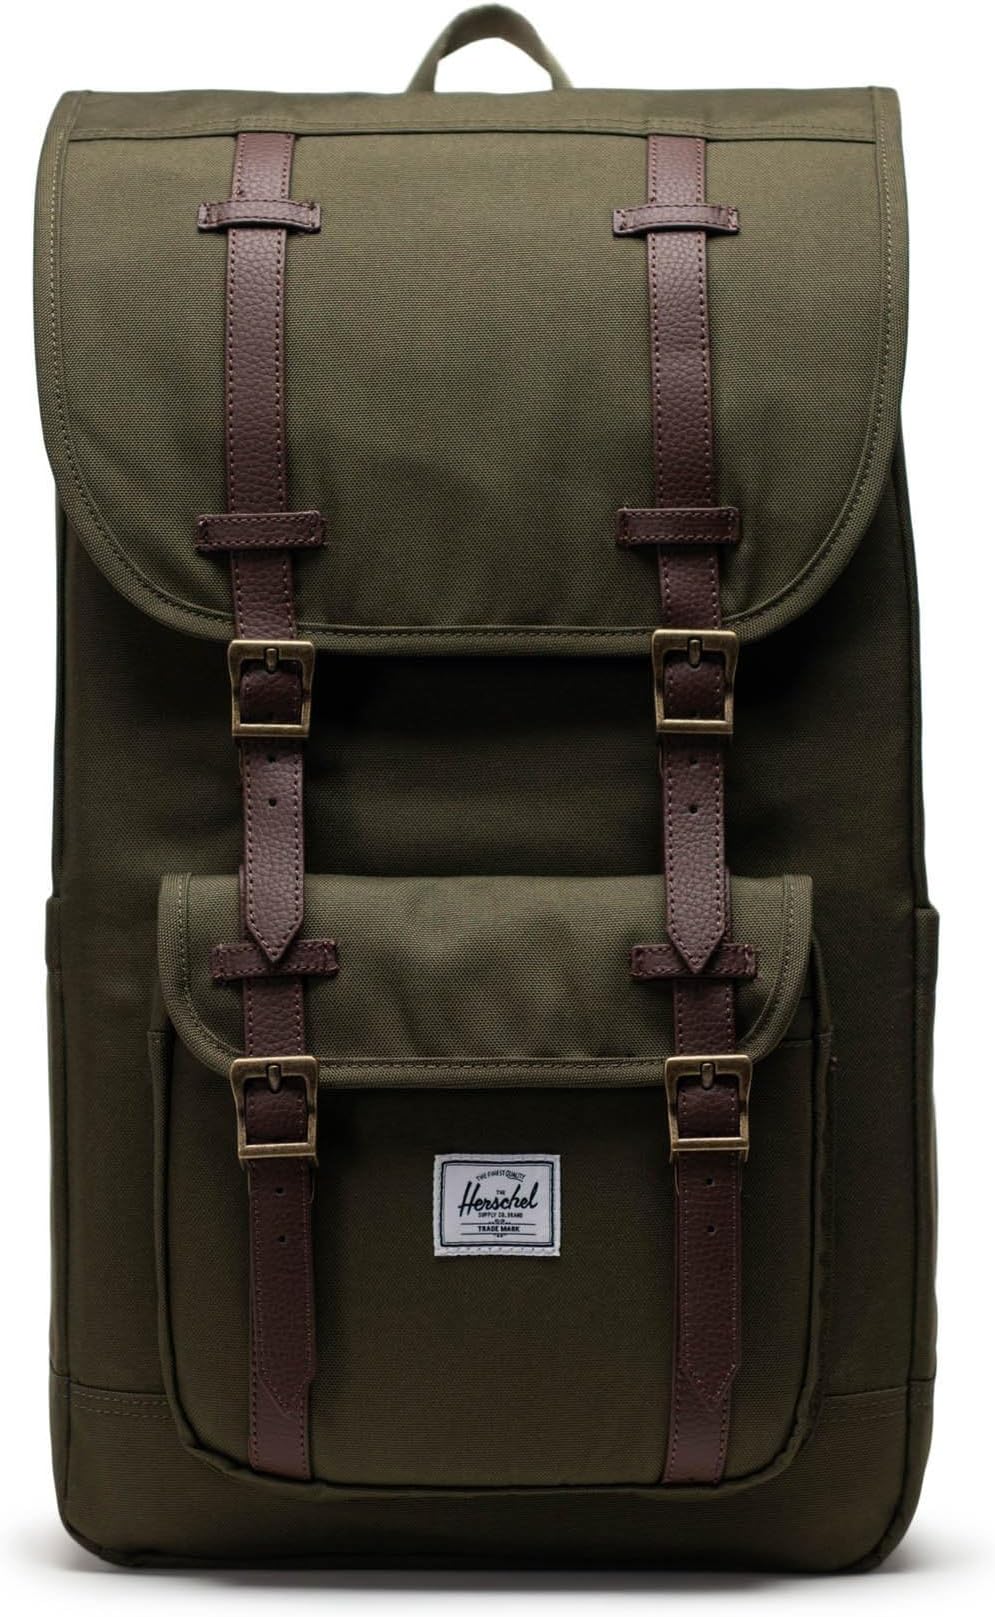 рюкзак heritage backpack herschel supply co цвет ivy green chicory coffee Рюкзак Little America Backpack Herschel Supply Co., цвет Ivy Green